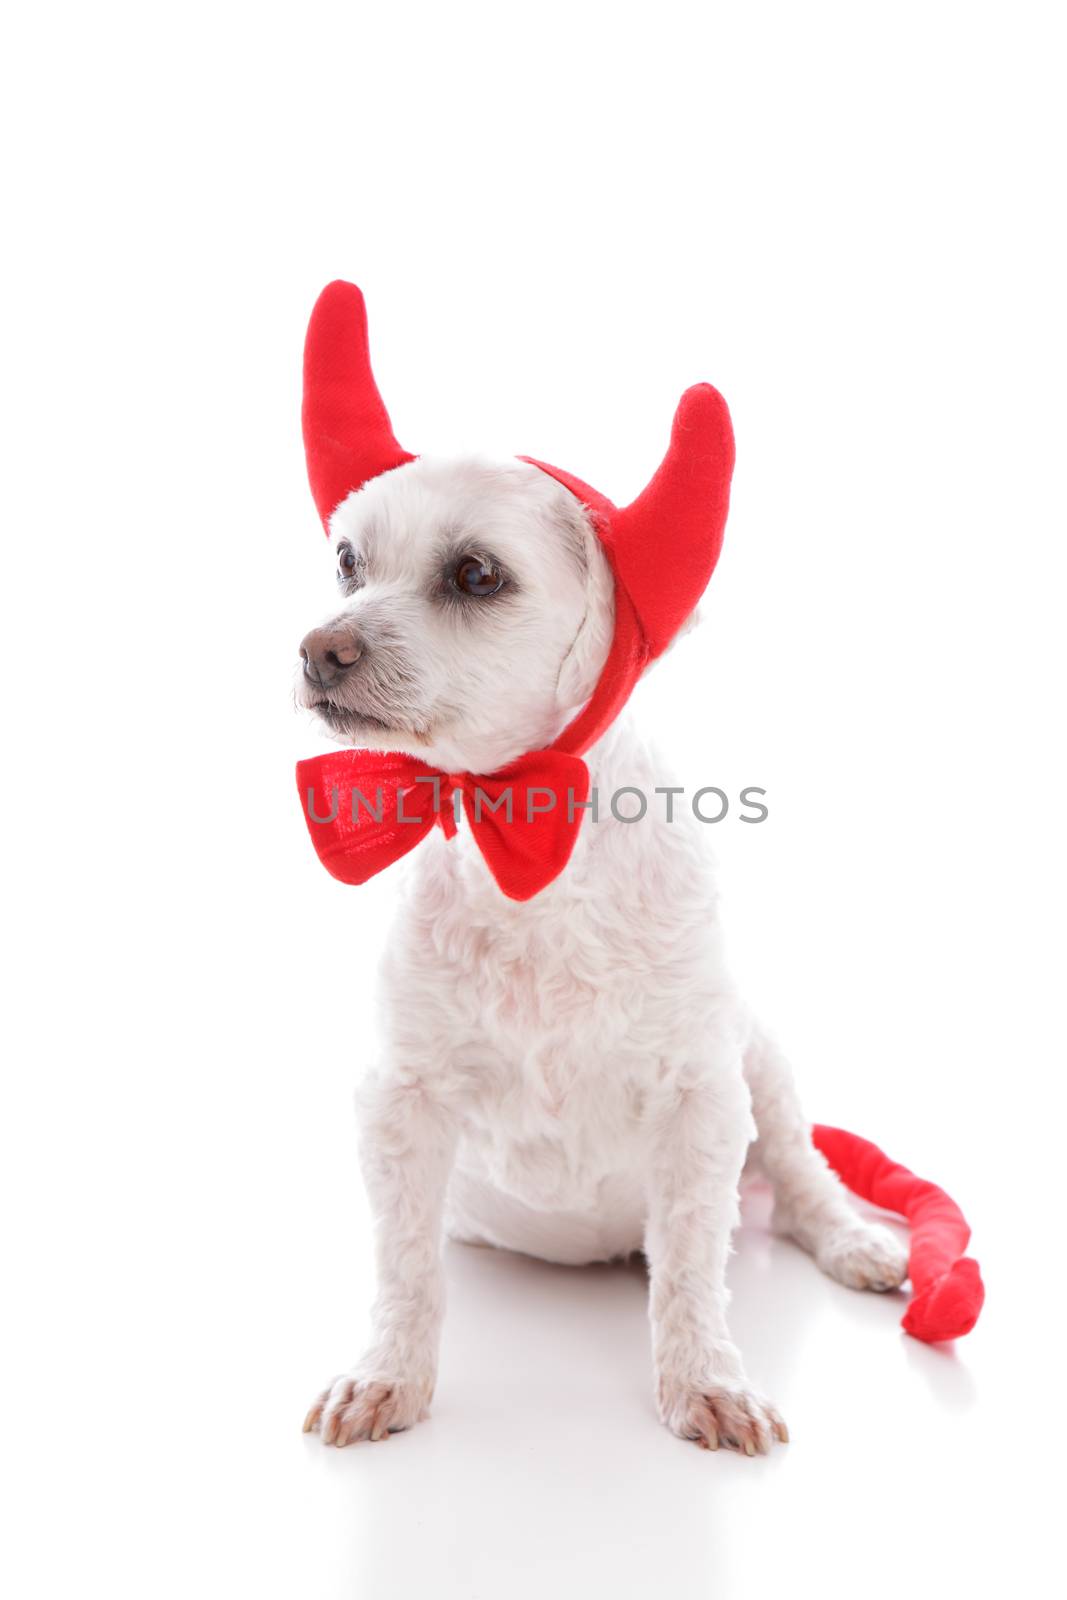 Naughty Devil Dog by lovleah